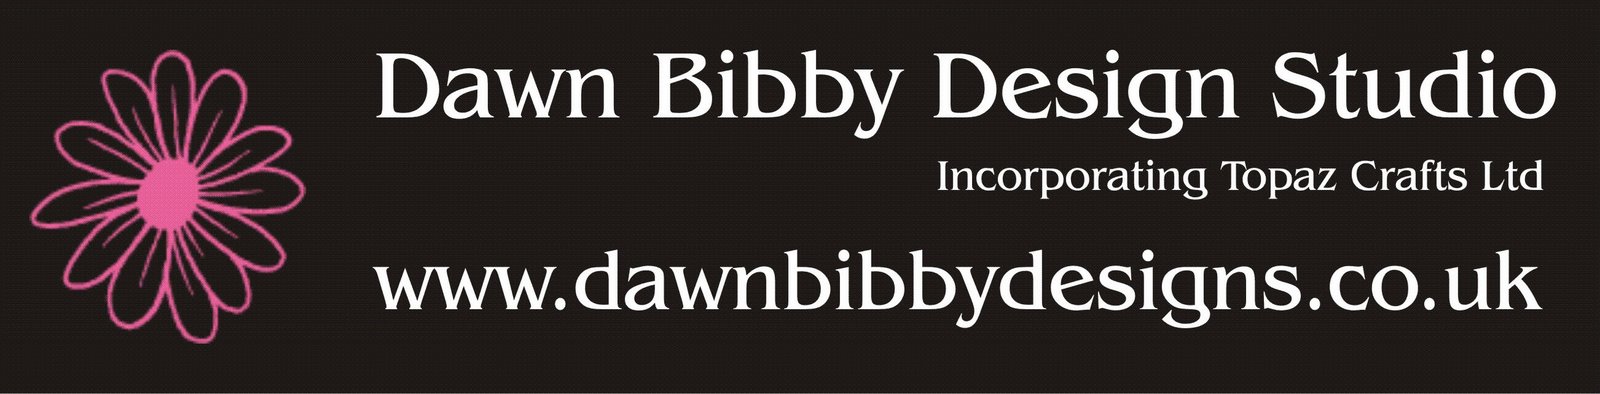 Dawn Bibby Design Studio